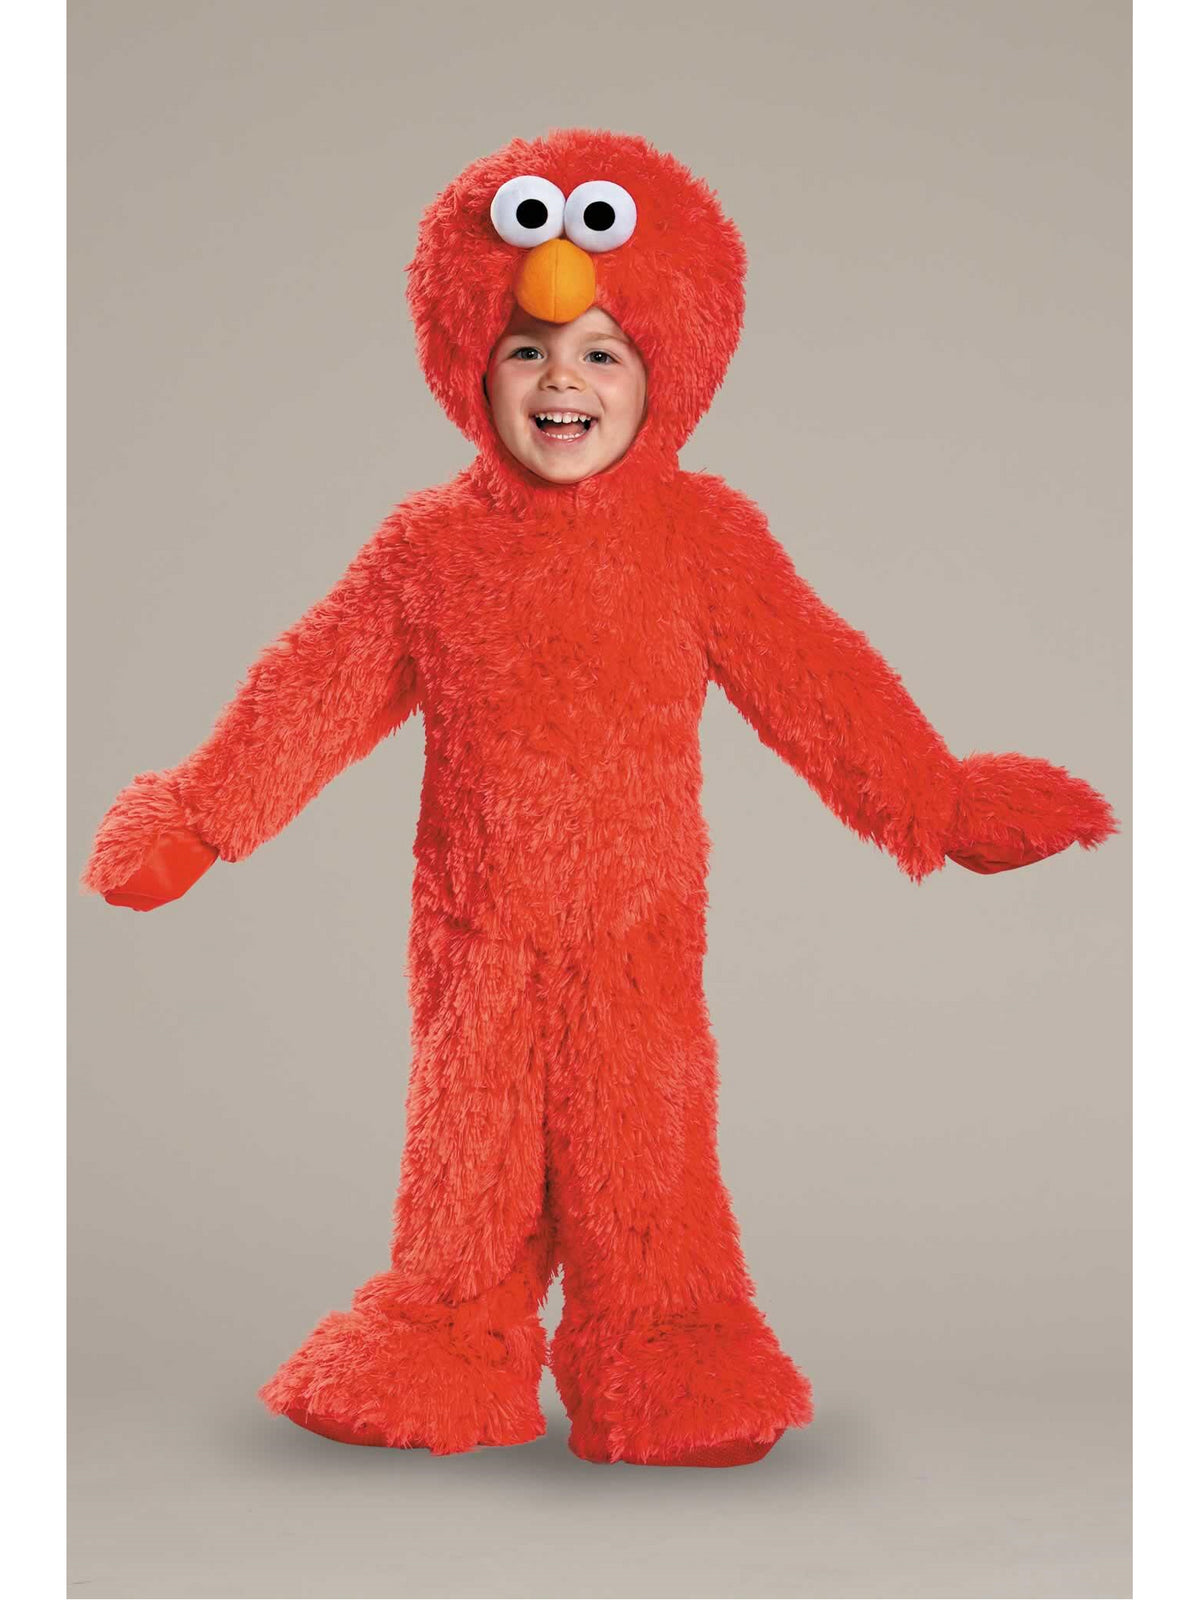 Elmo Costume for Kids - Chasing Fireflies